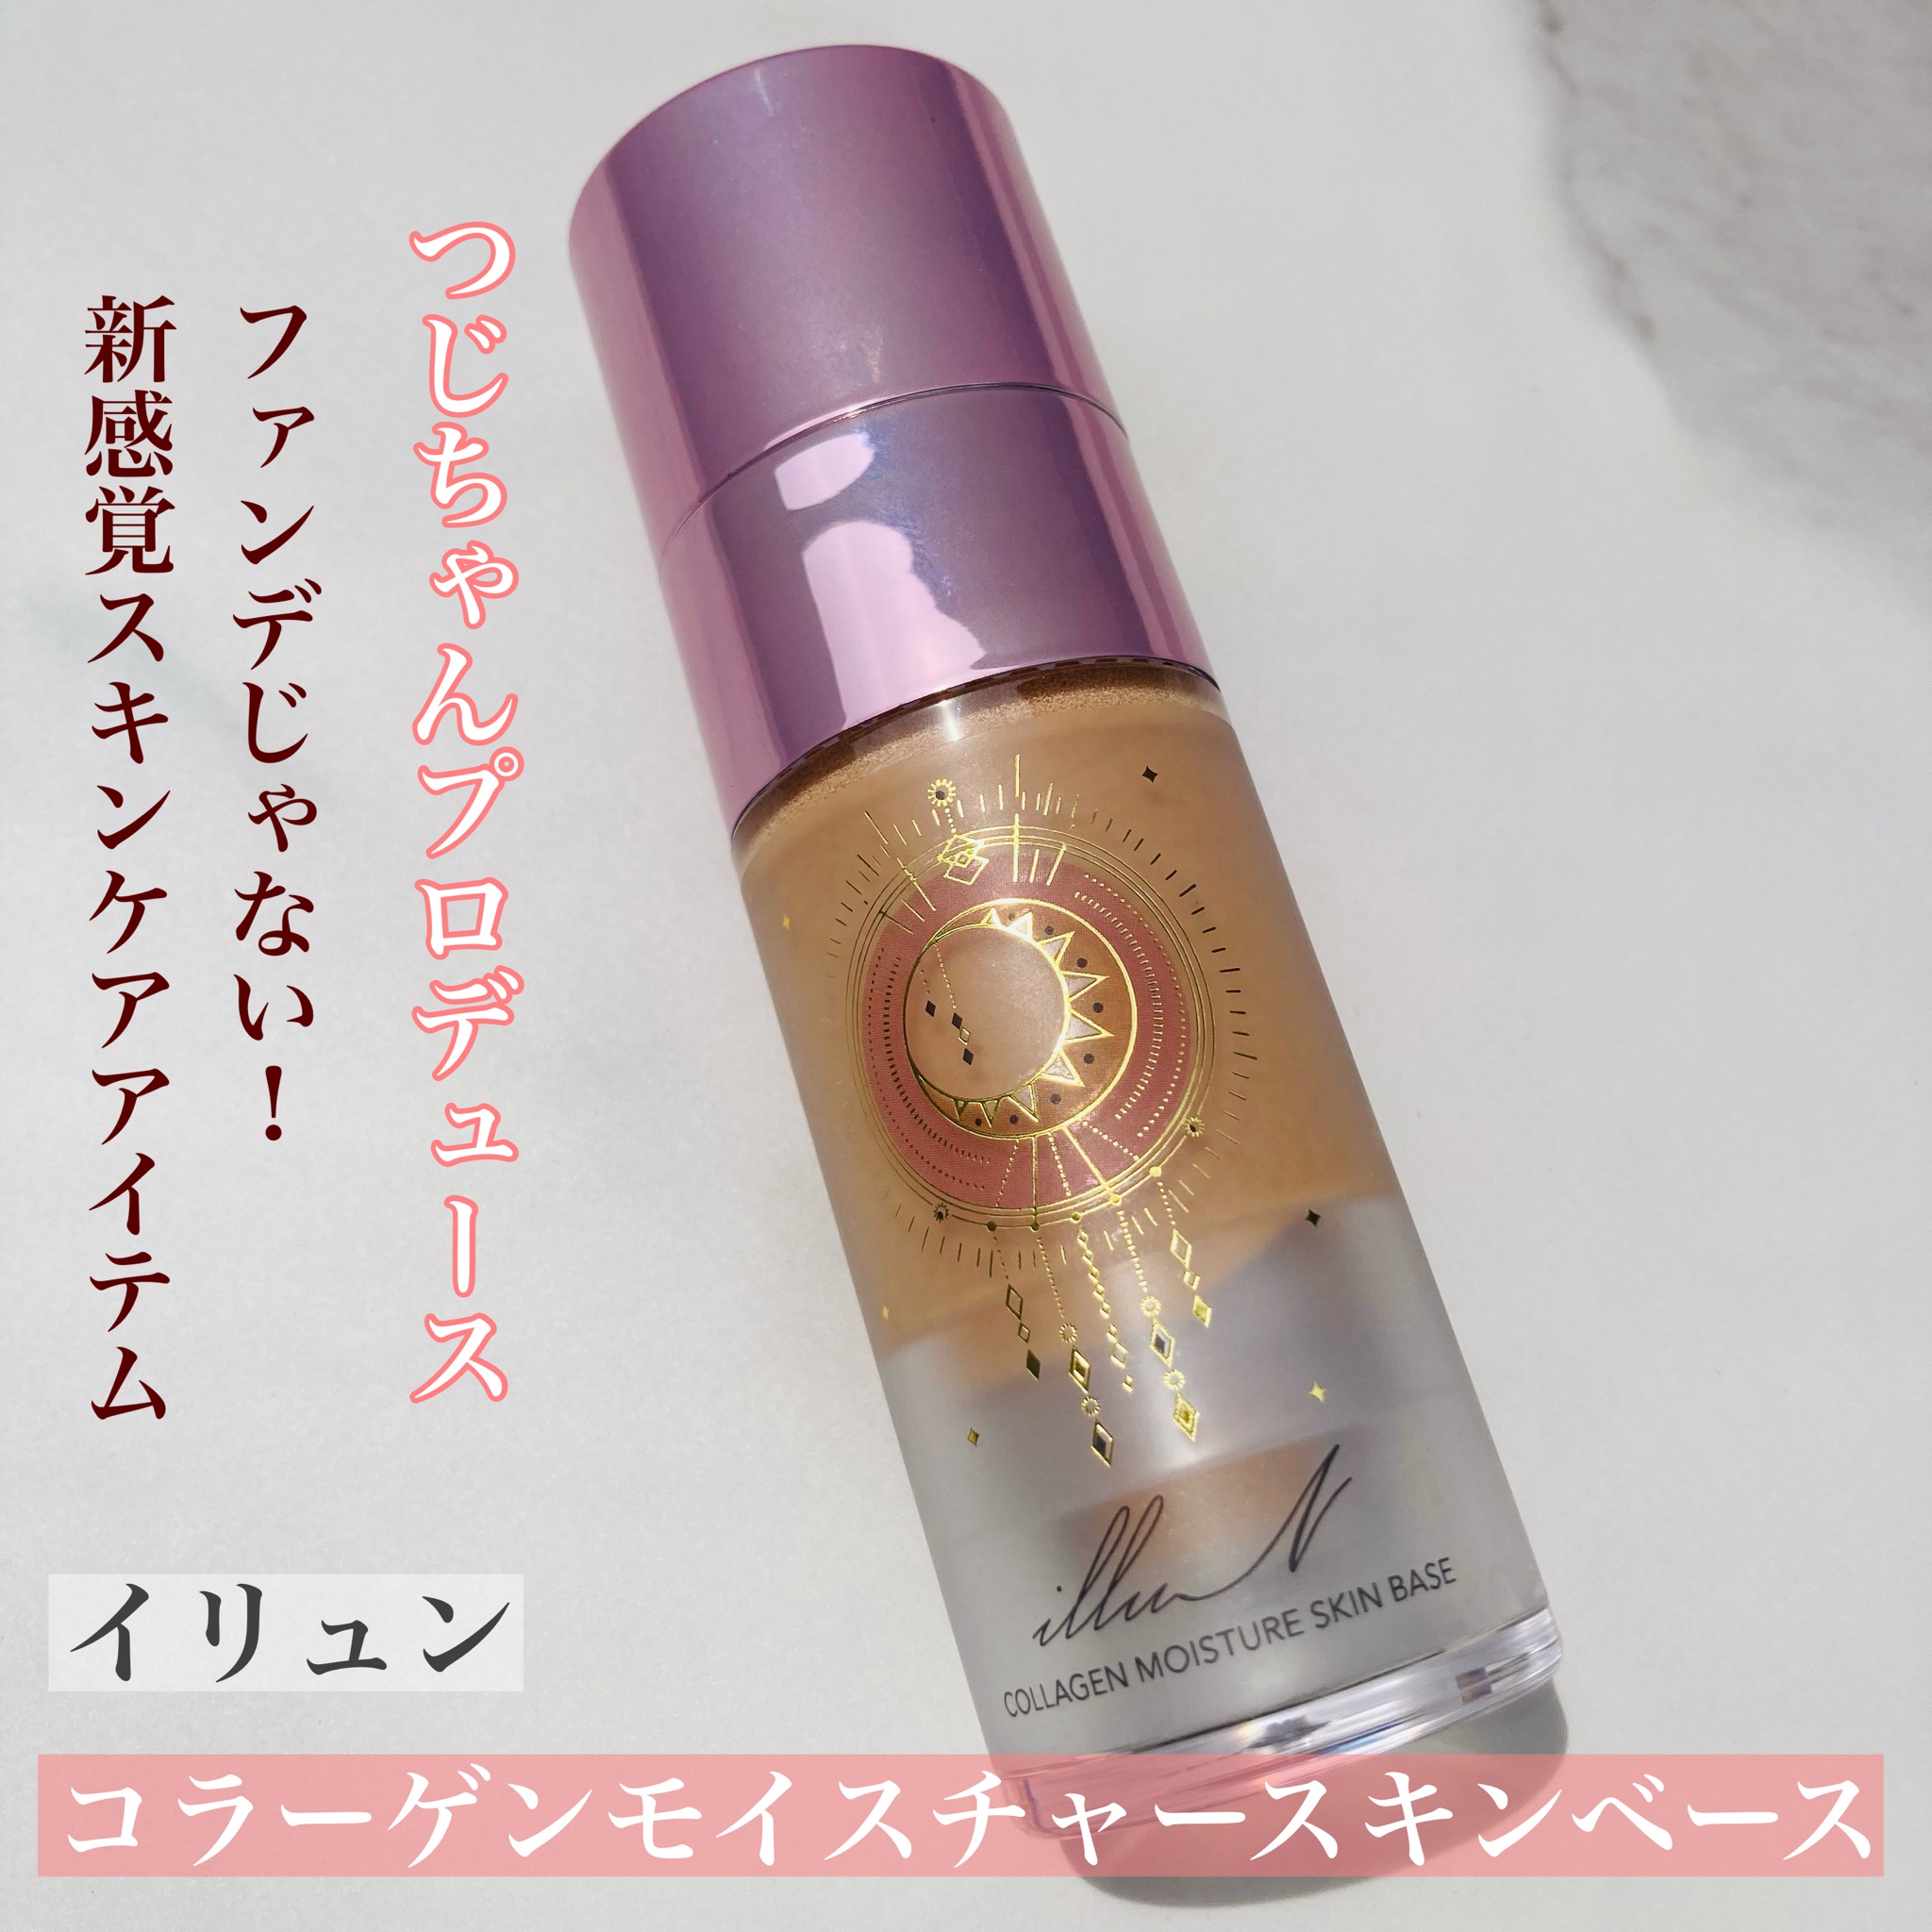 illuN / Collagen moisture skinbaseの口コミ（by mikan_cosmecafeさん